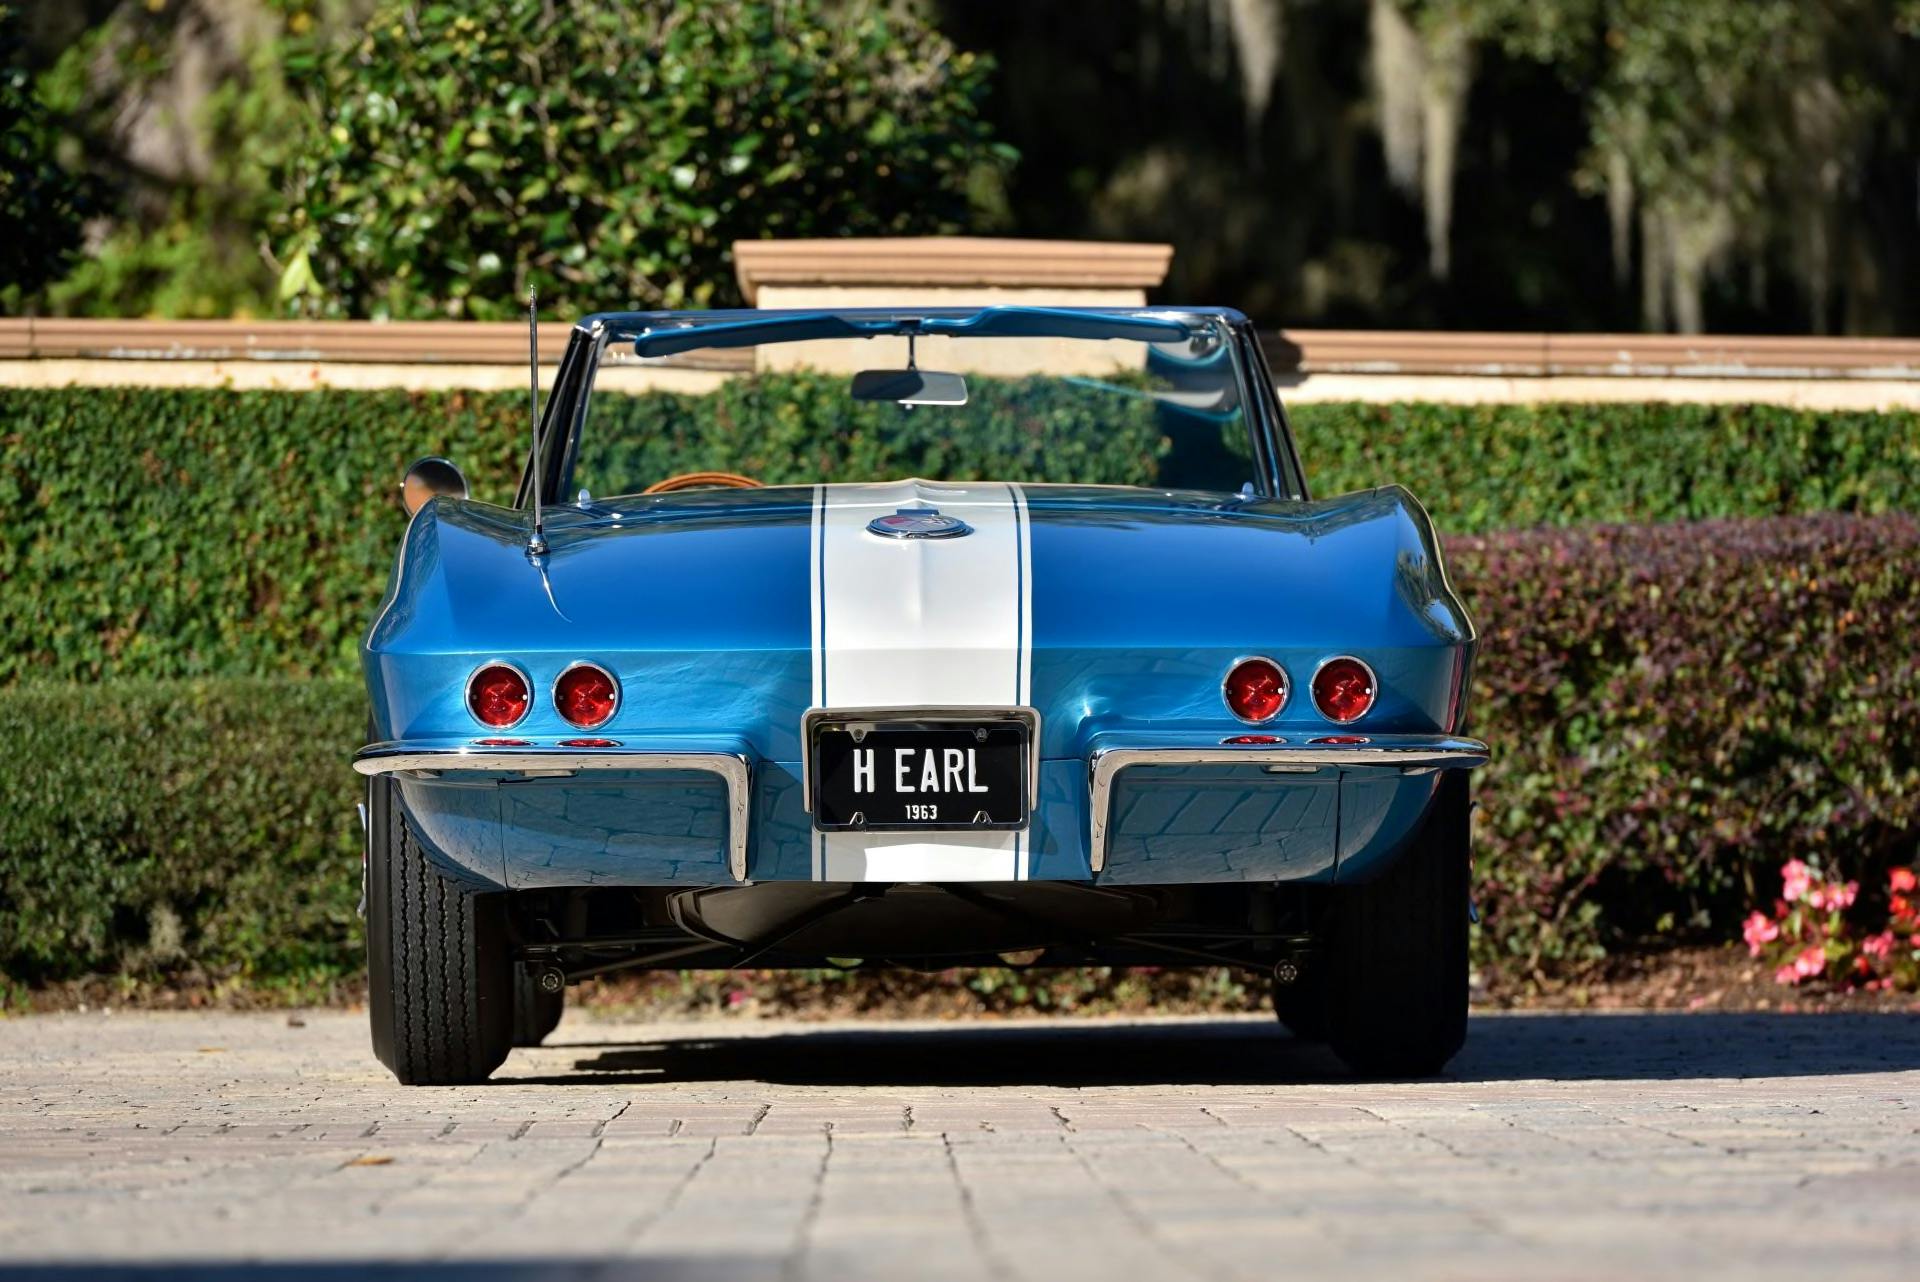 1963 Chevrolet Corvette Harley Earl Styling Car rear